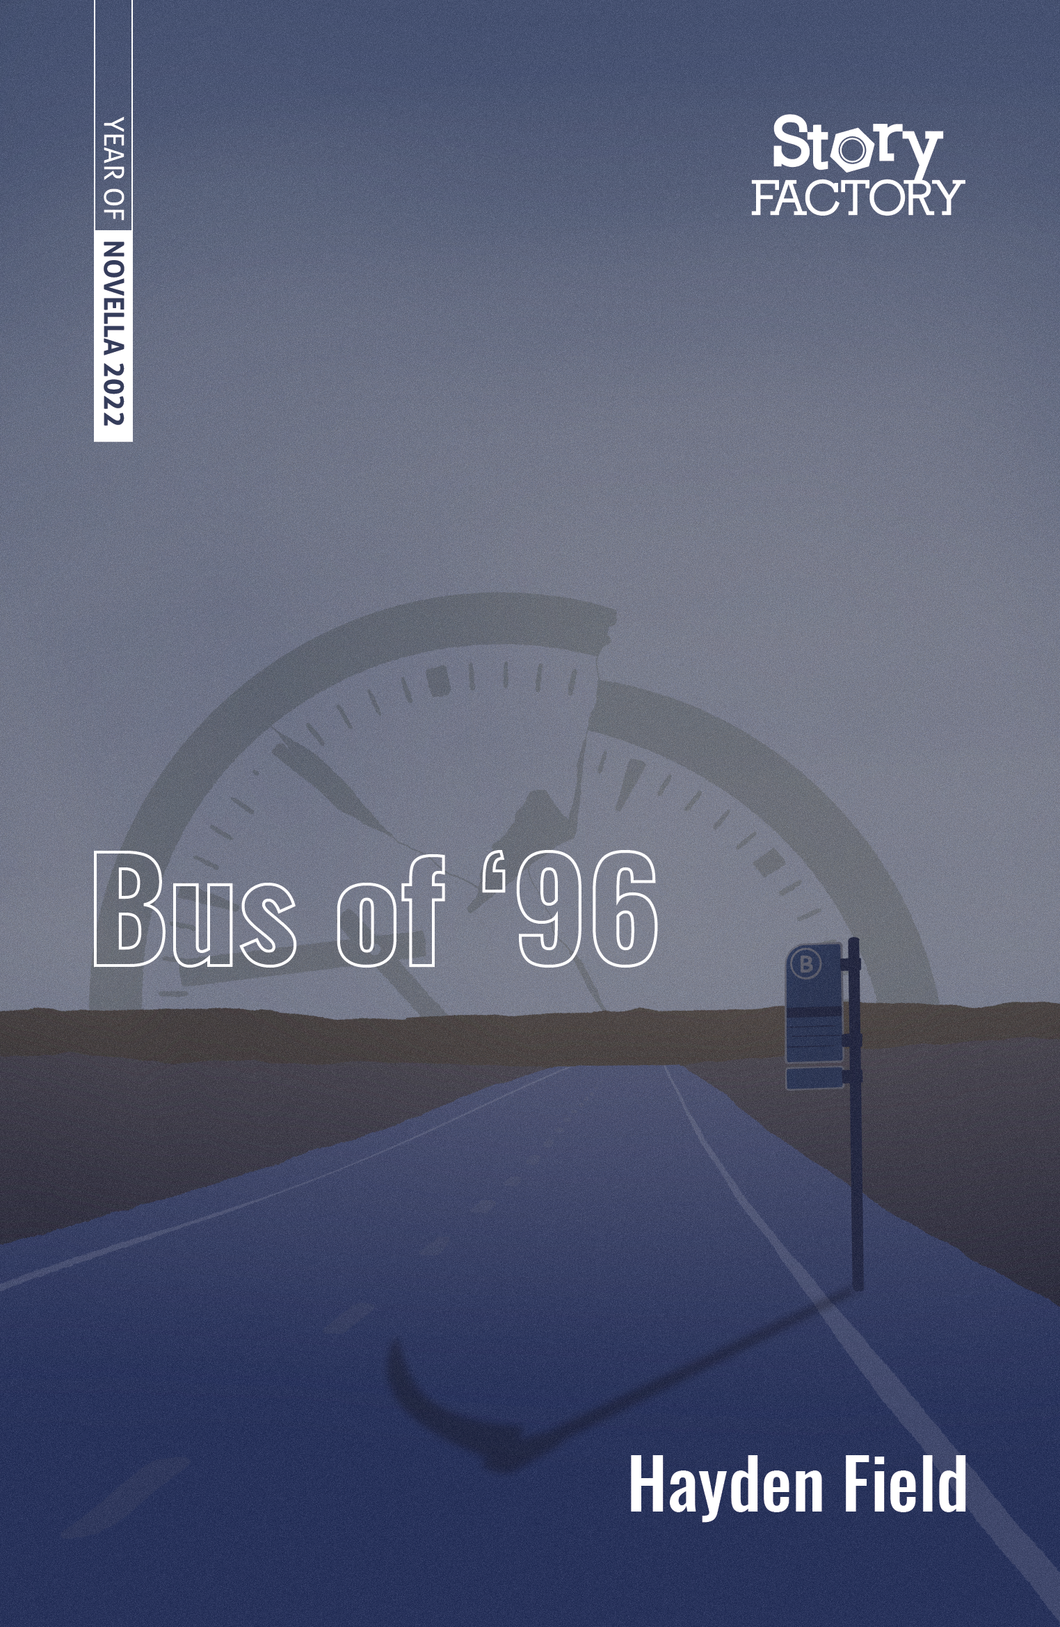 Bus of ‘96 by Hayden Field